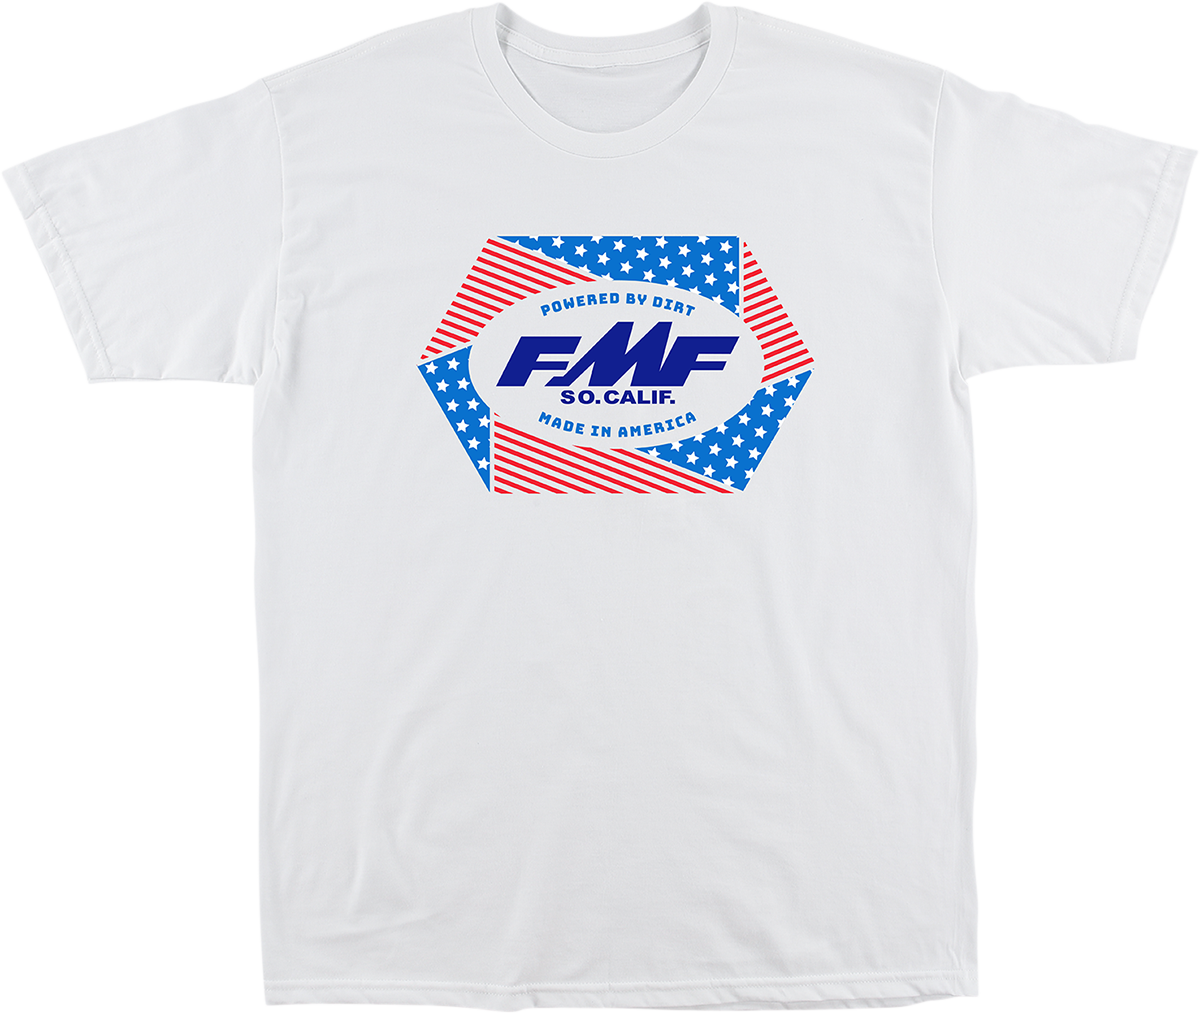 FMF Geometry T-Shirt - White - XL SU21118901WHXL 3030-20699